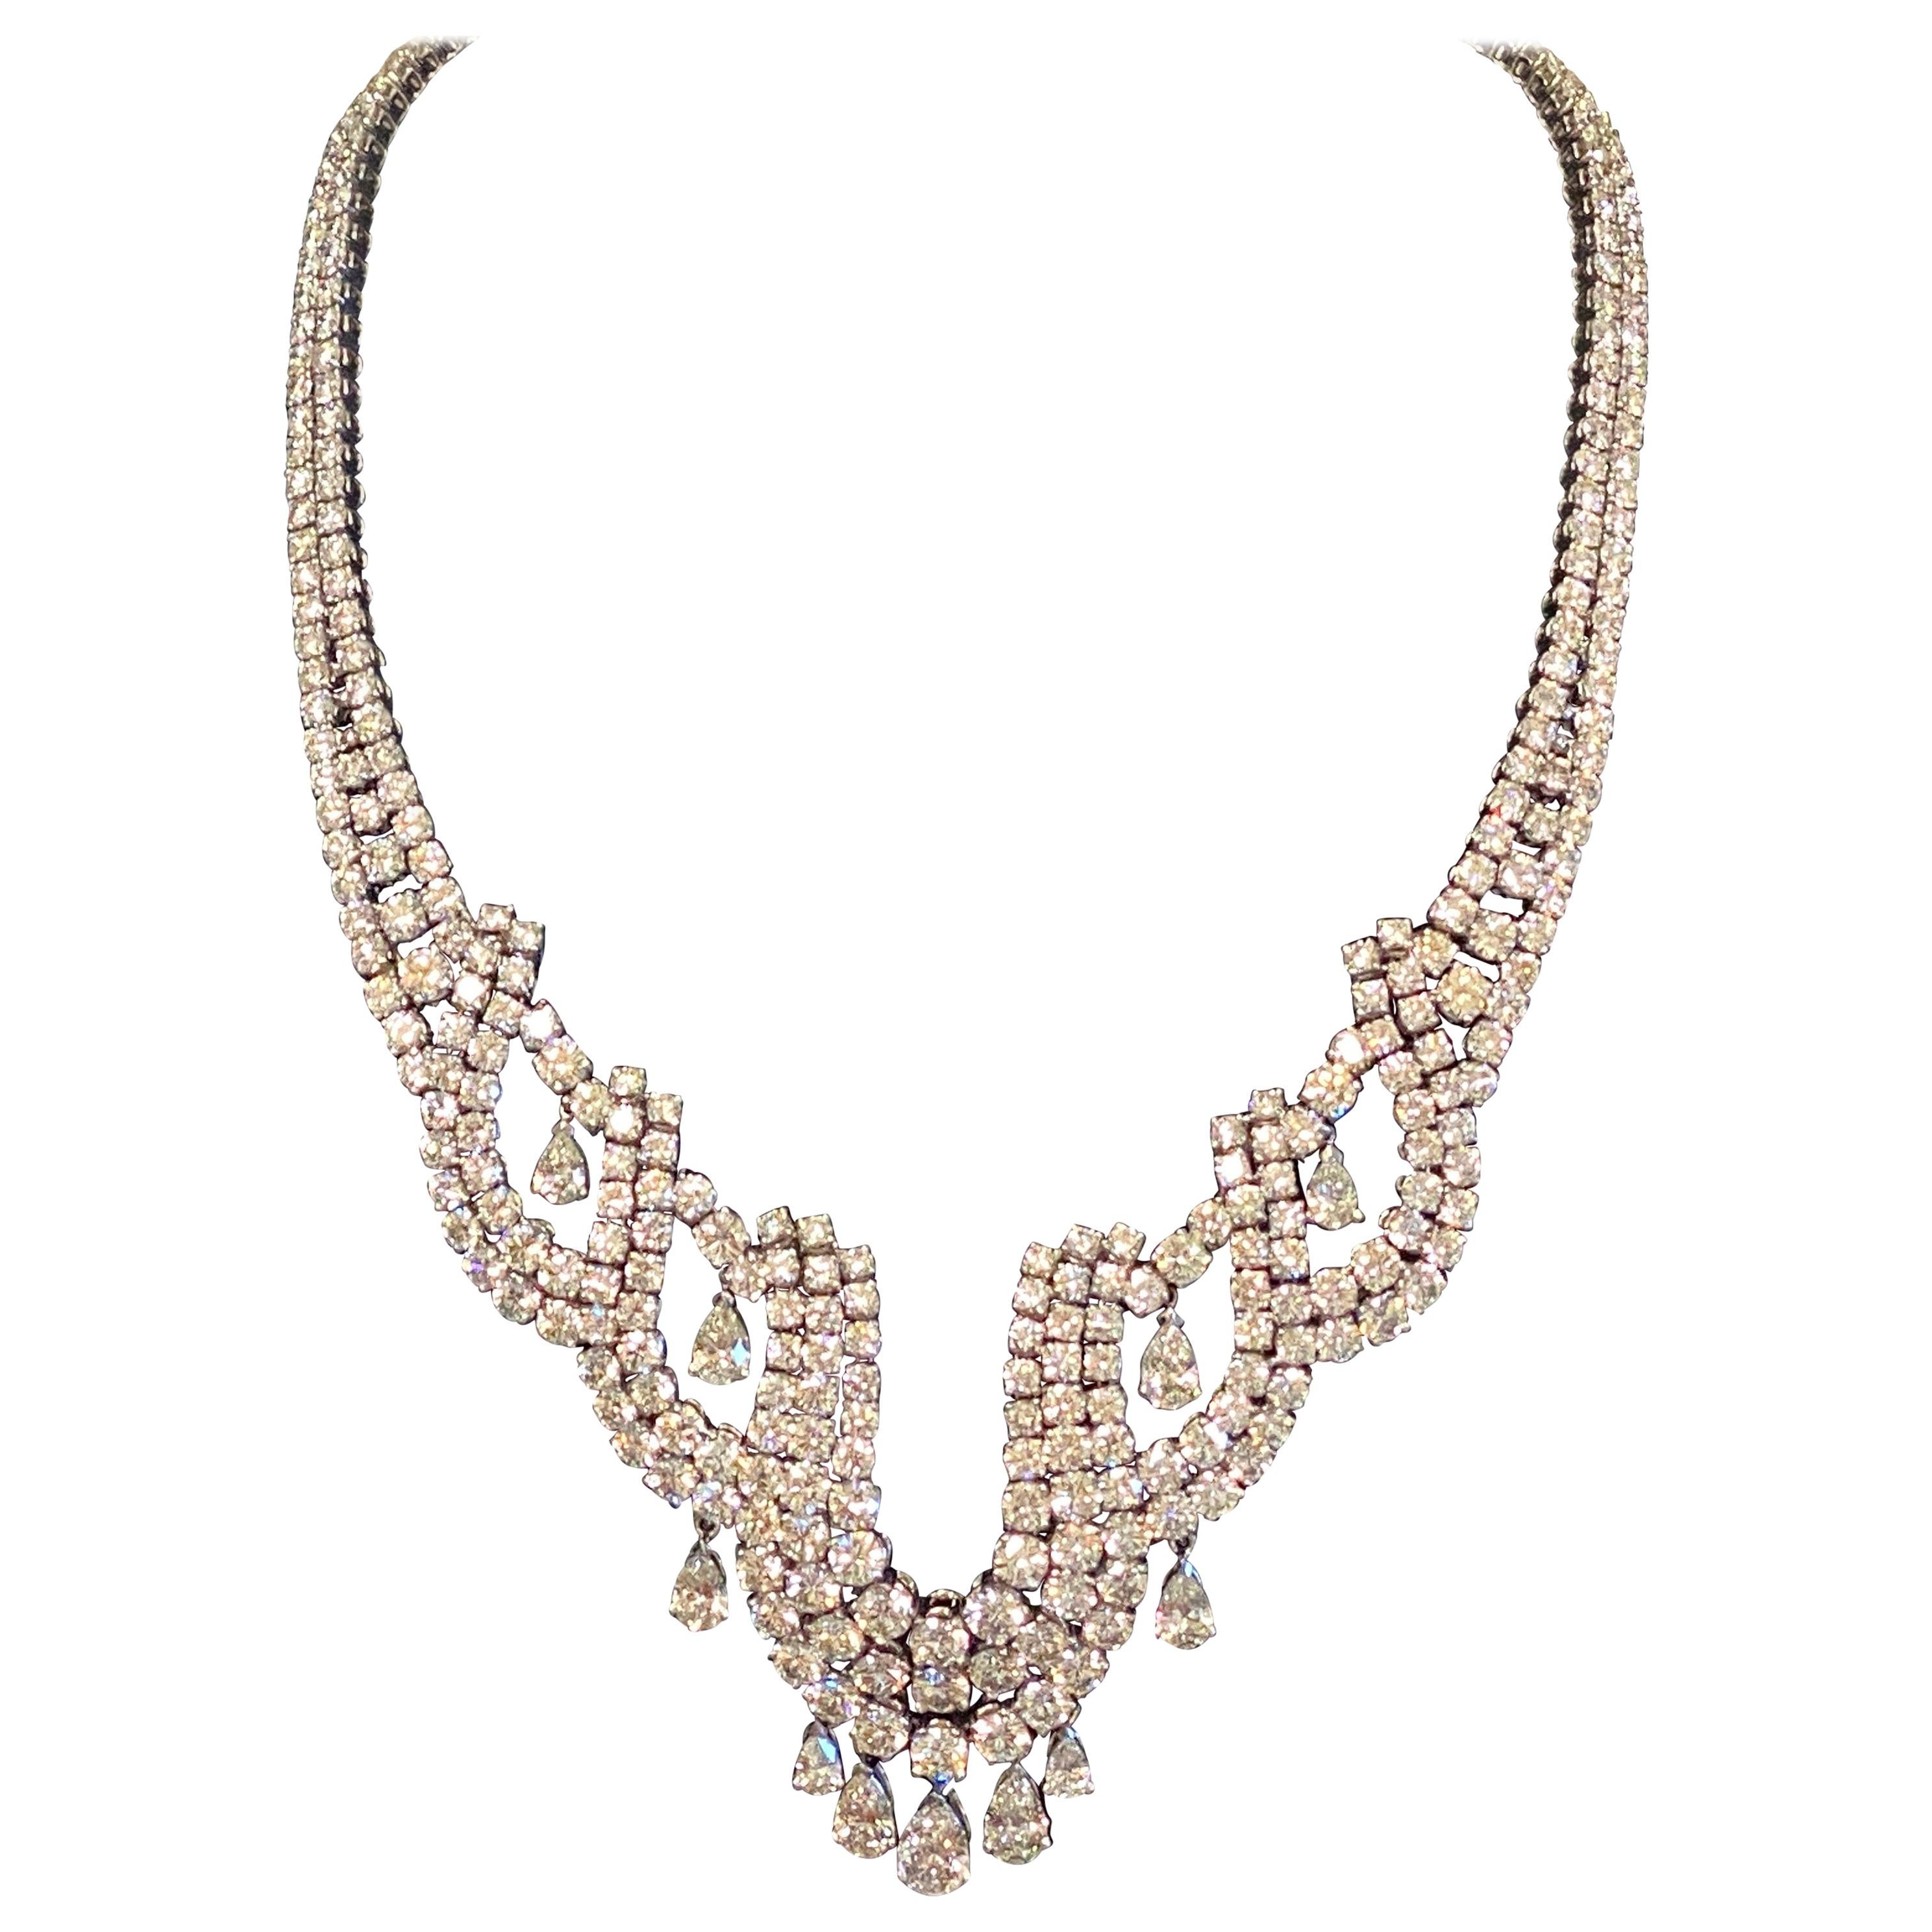 60.22 Carat Diamond Necklace in 18 Karat White Gold